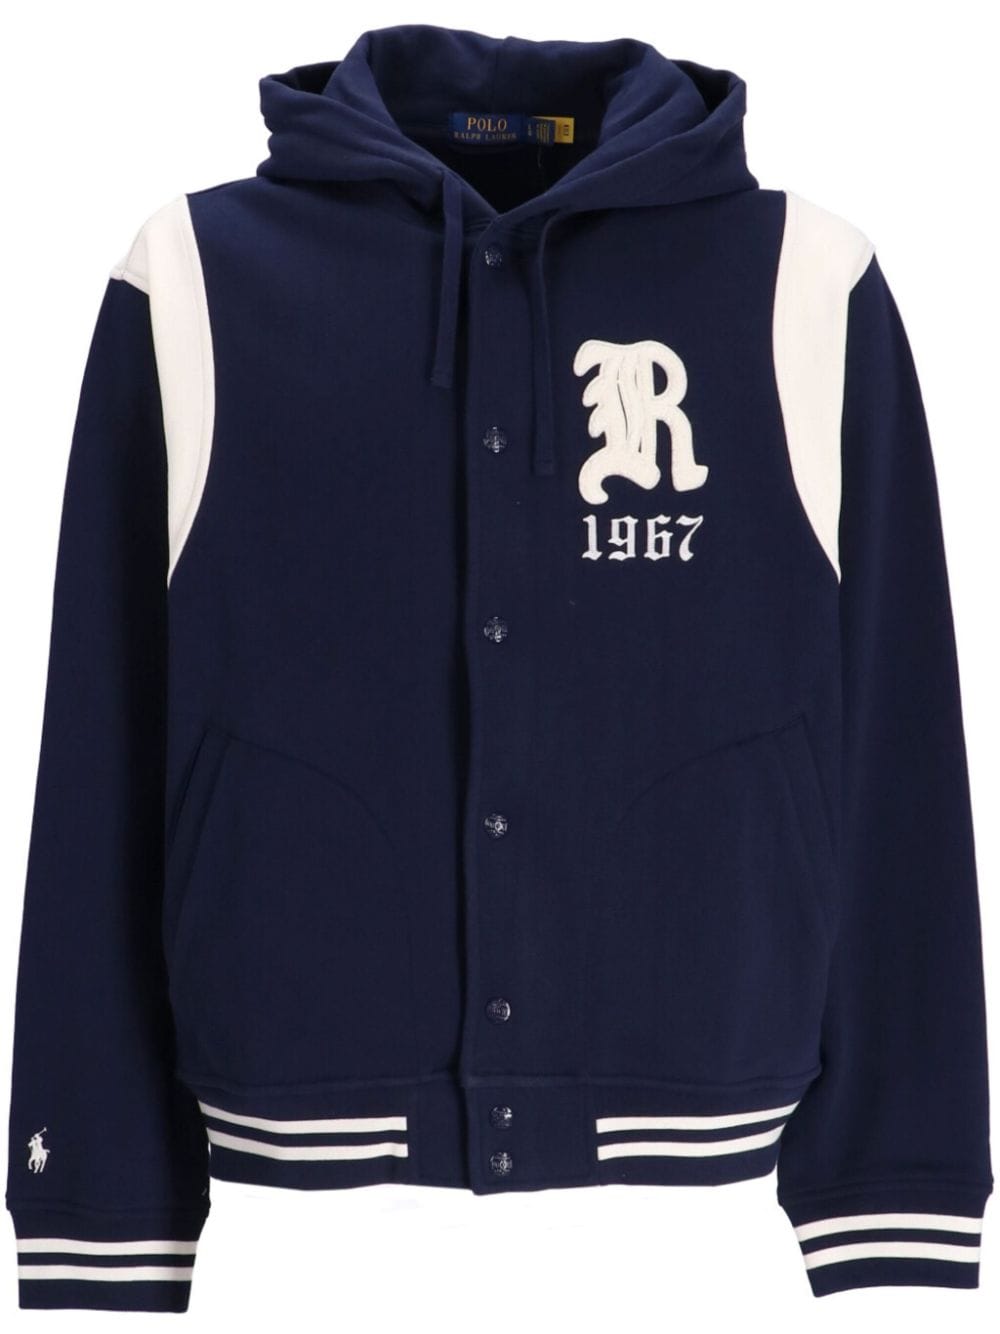 Buy Polo Ralph Lauren Men Royal Blue Fleece Baseball Jacket Online - 744774